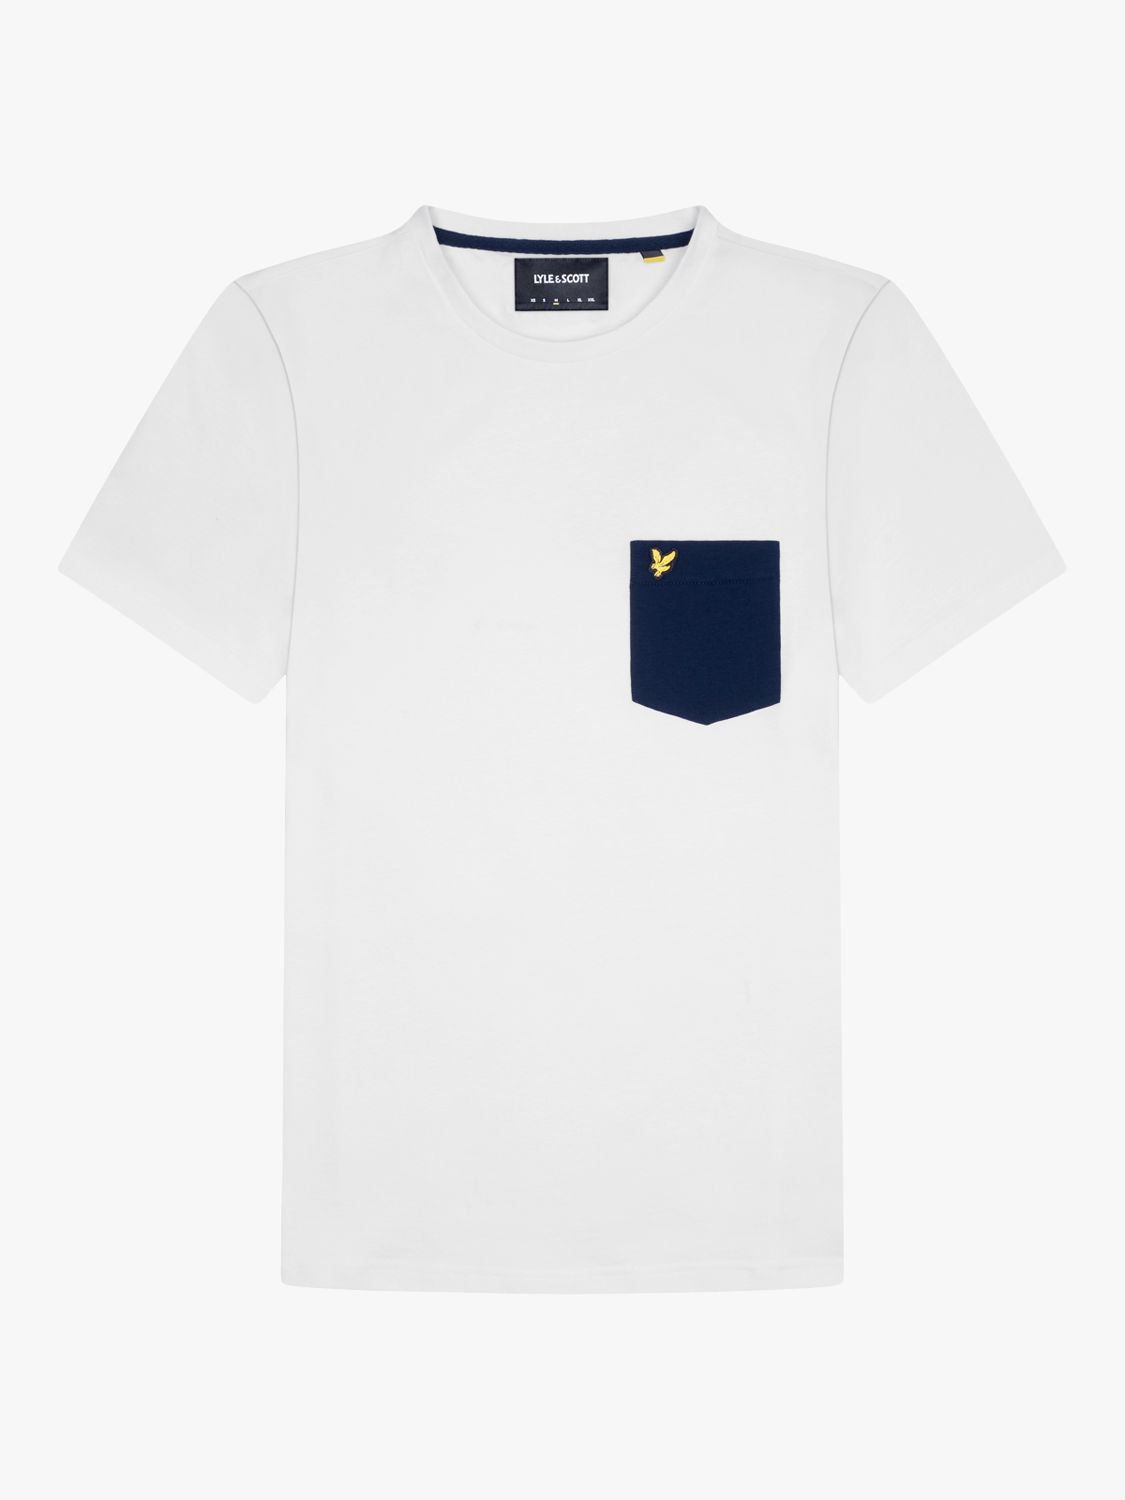 Lyle & Scott Contrast Pocket T-Shirt, White/Navy, S